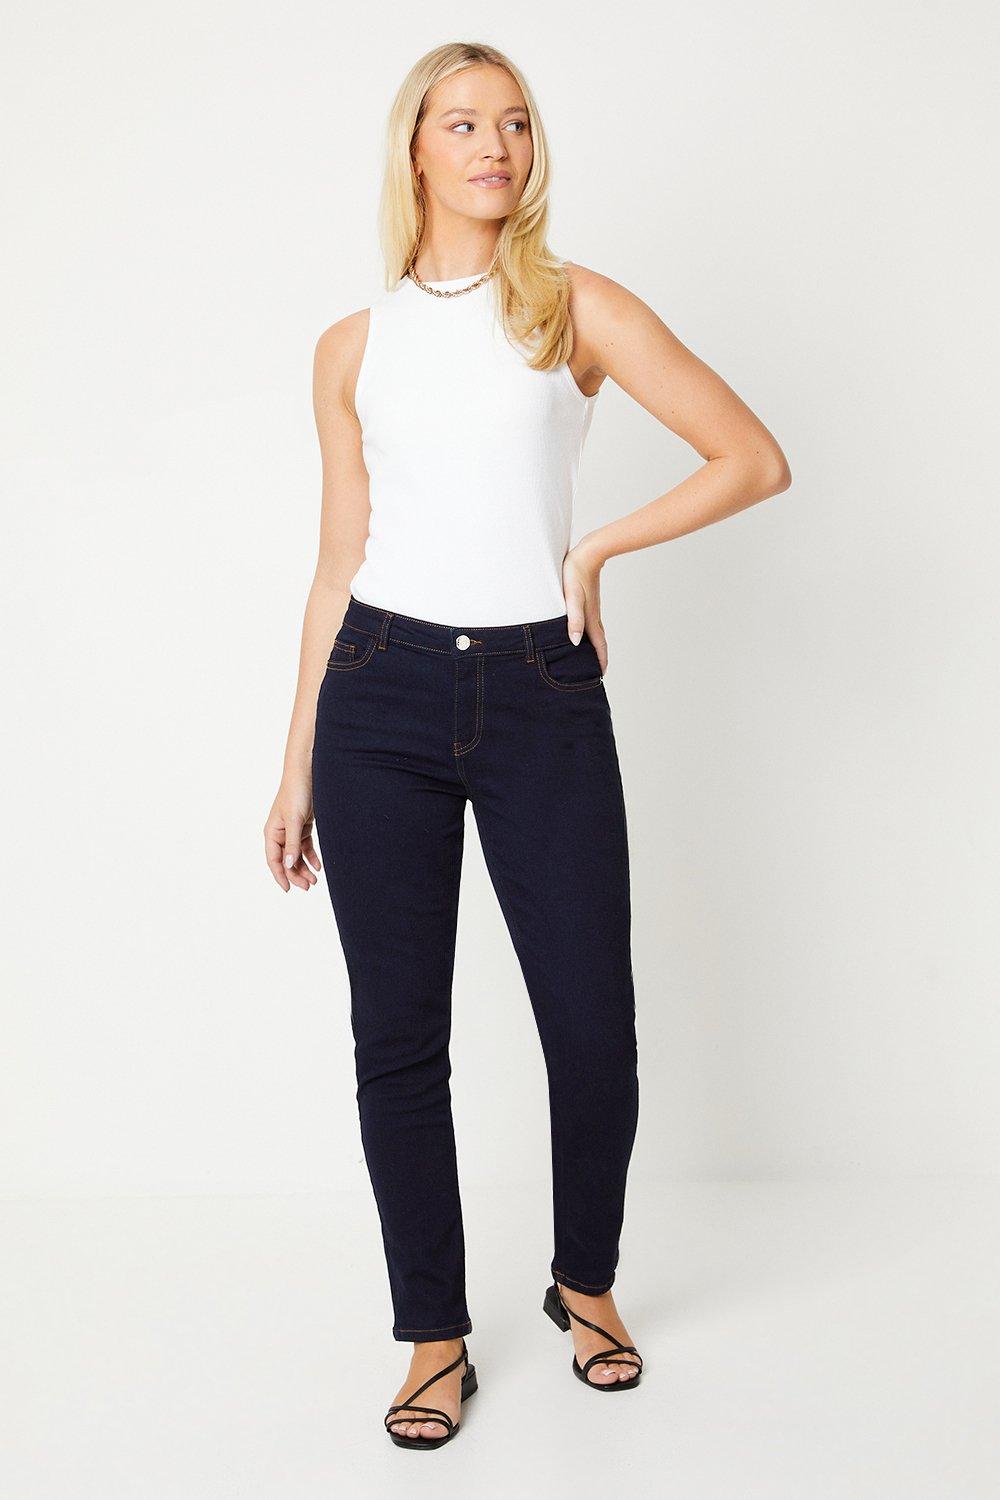 Women’s Comfort Stretch Slim Jeans - indigo - 14